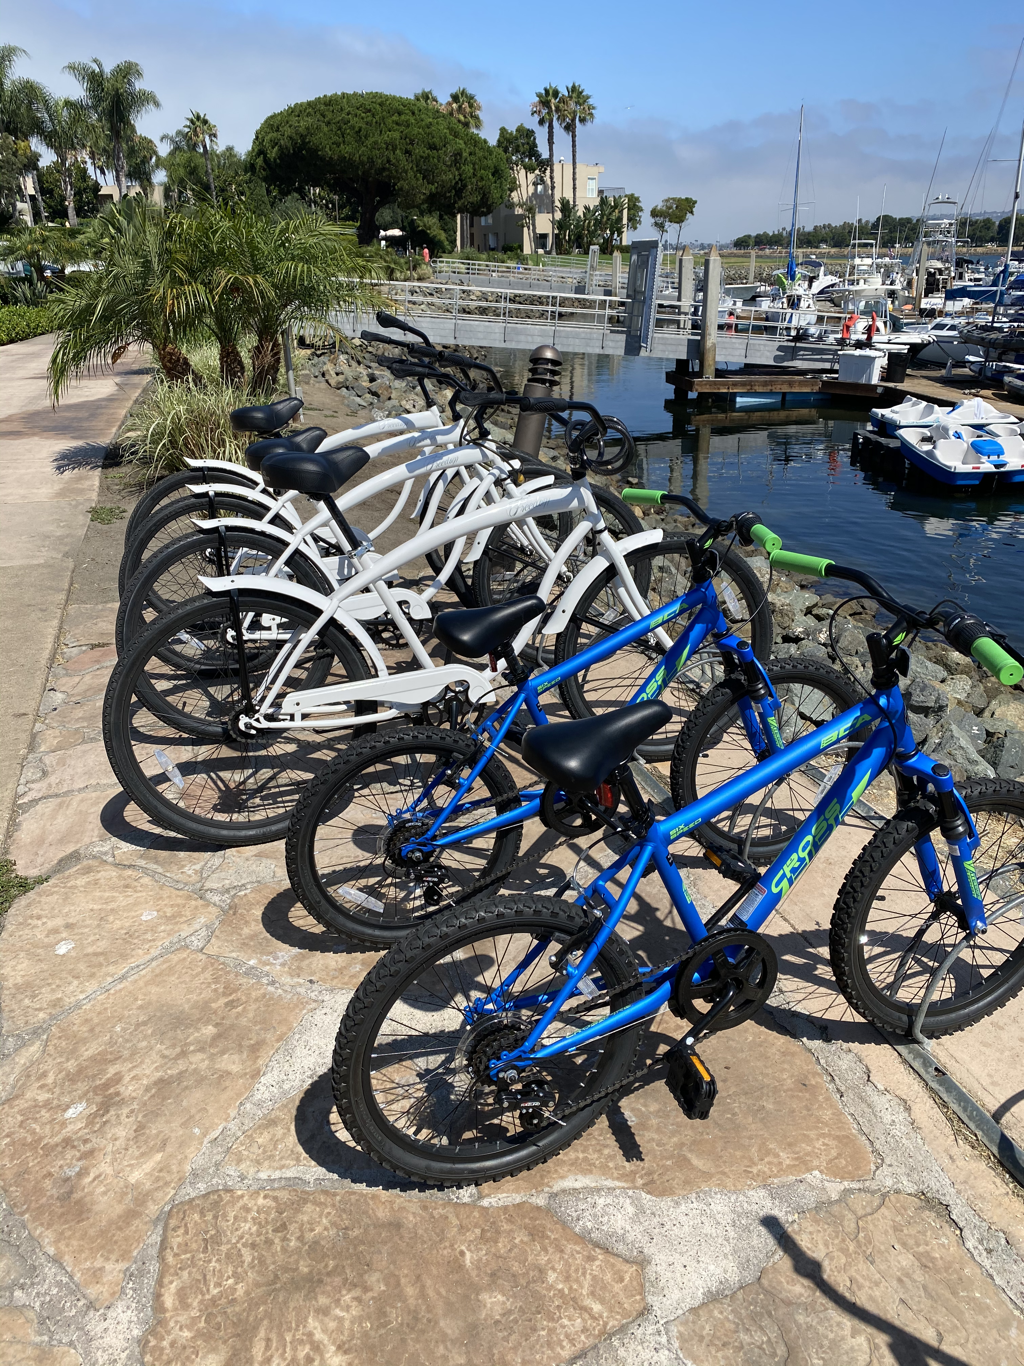 Bicycles in a bike rack